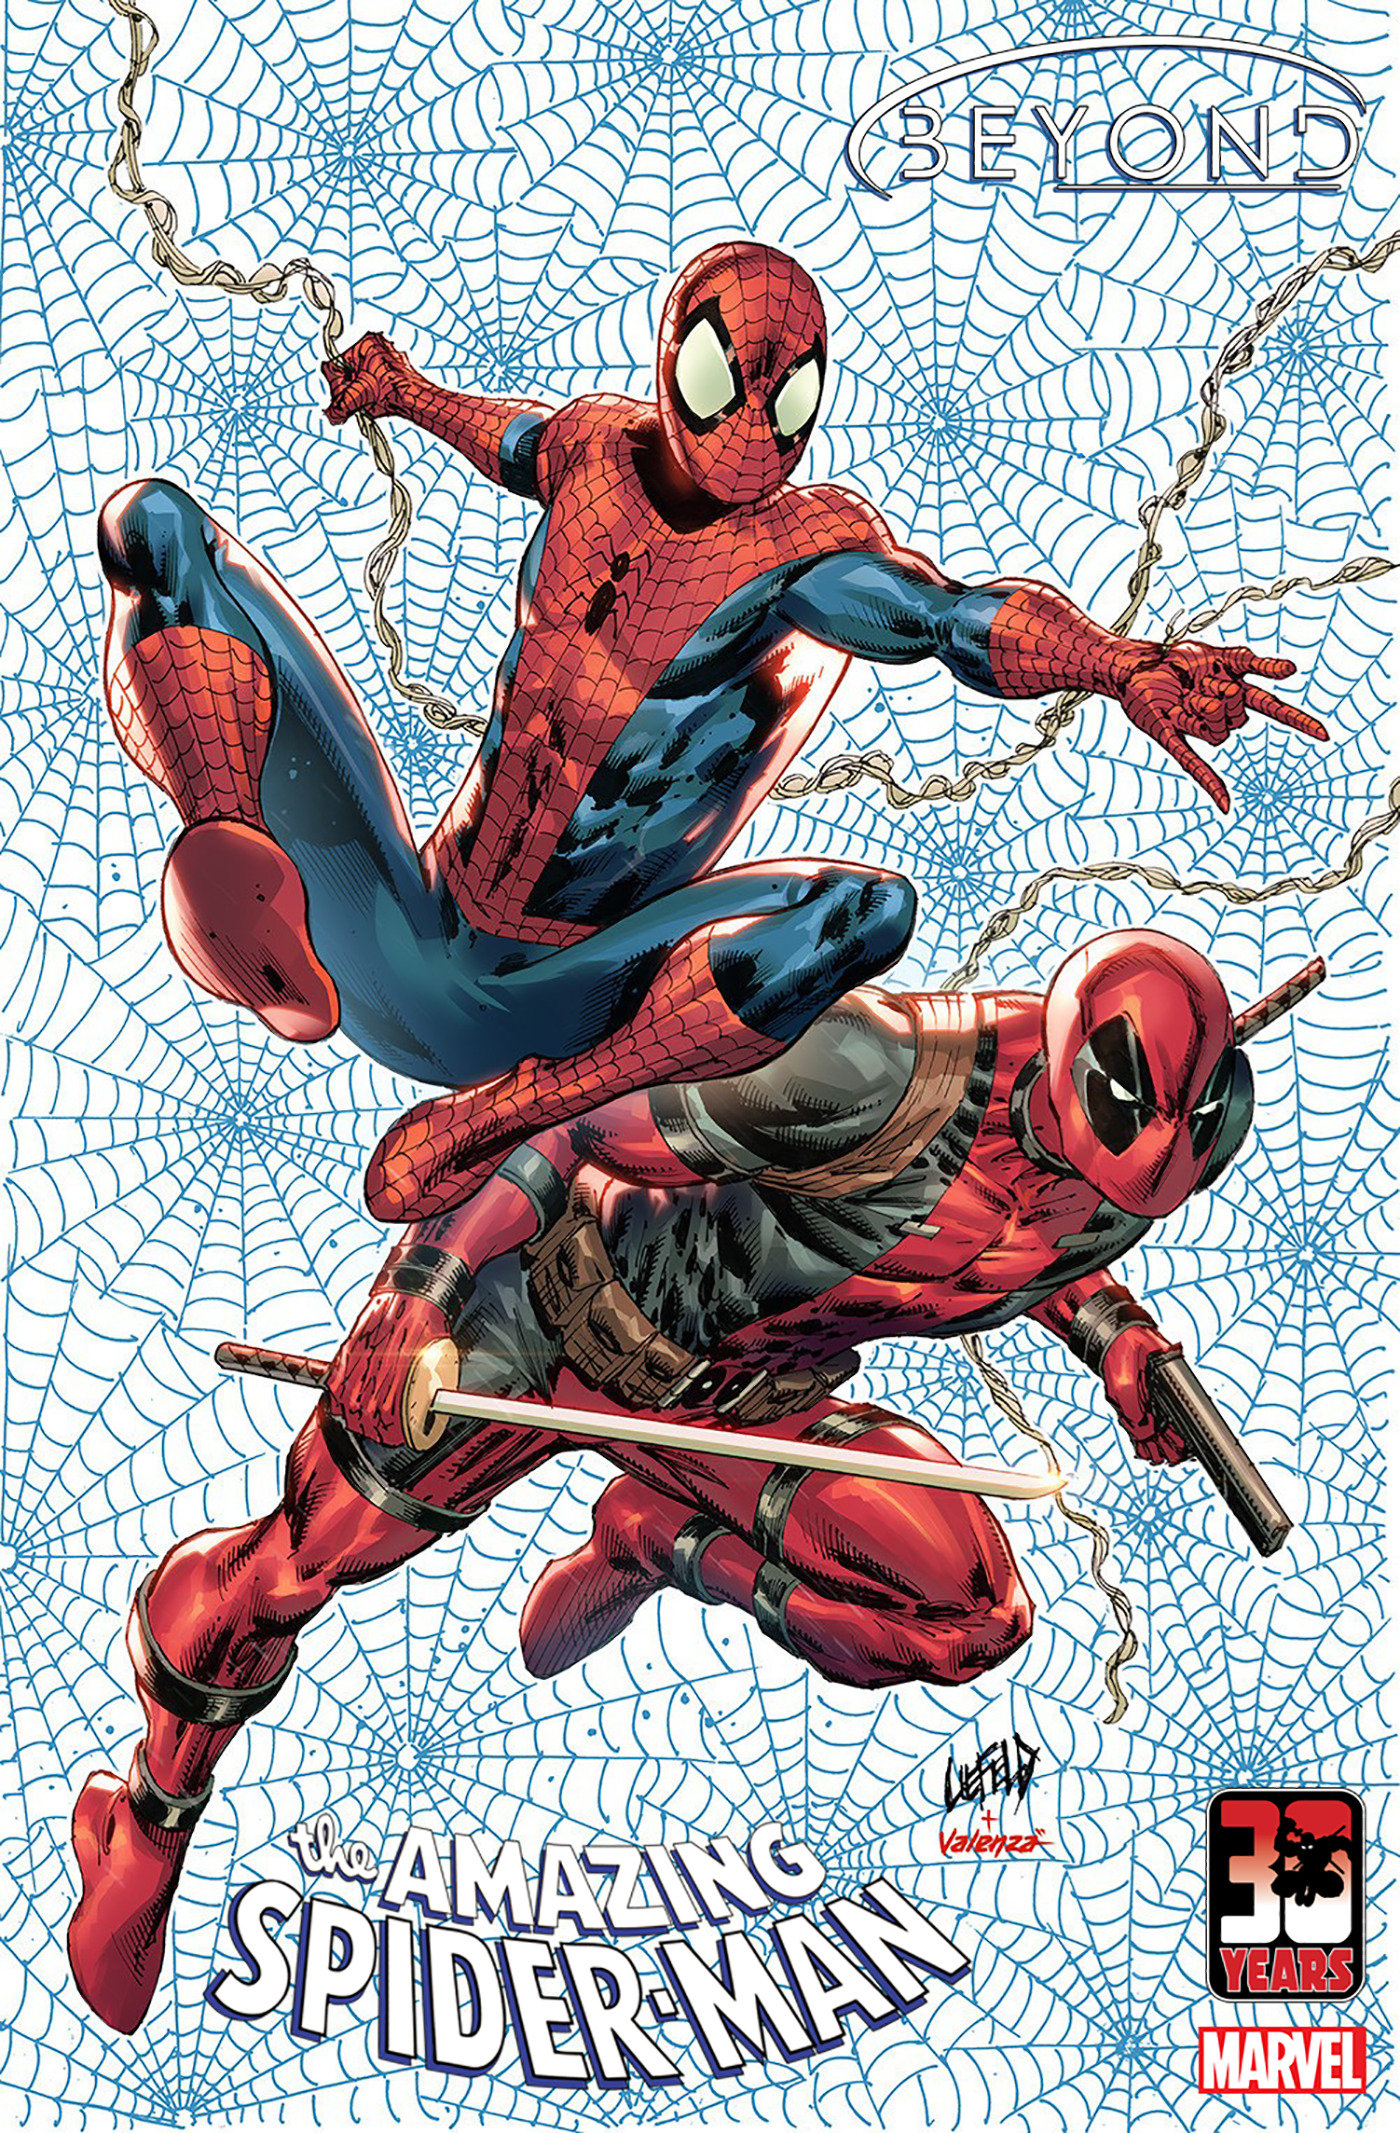 Amazing Spider-Man #78 Beyond Liefeld Deadpool 30th Anniversary Variant (2018)